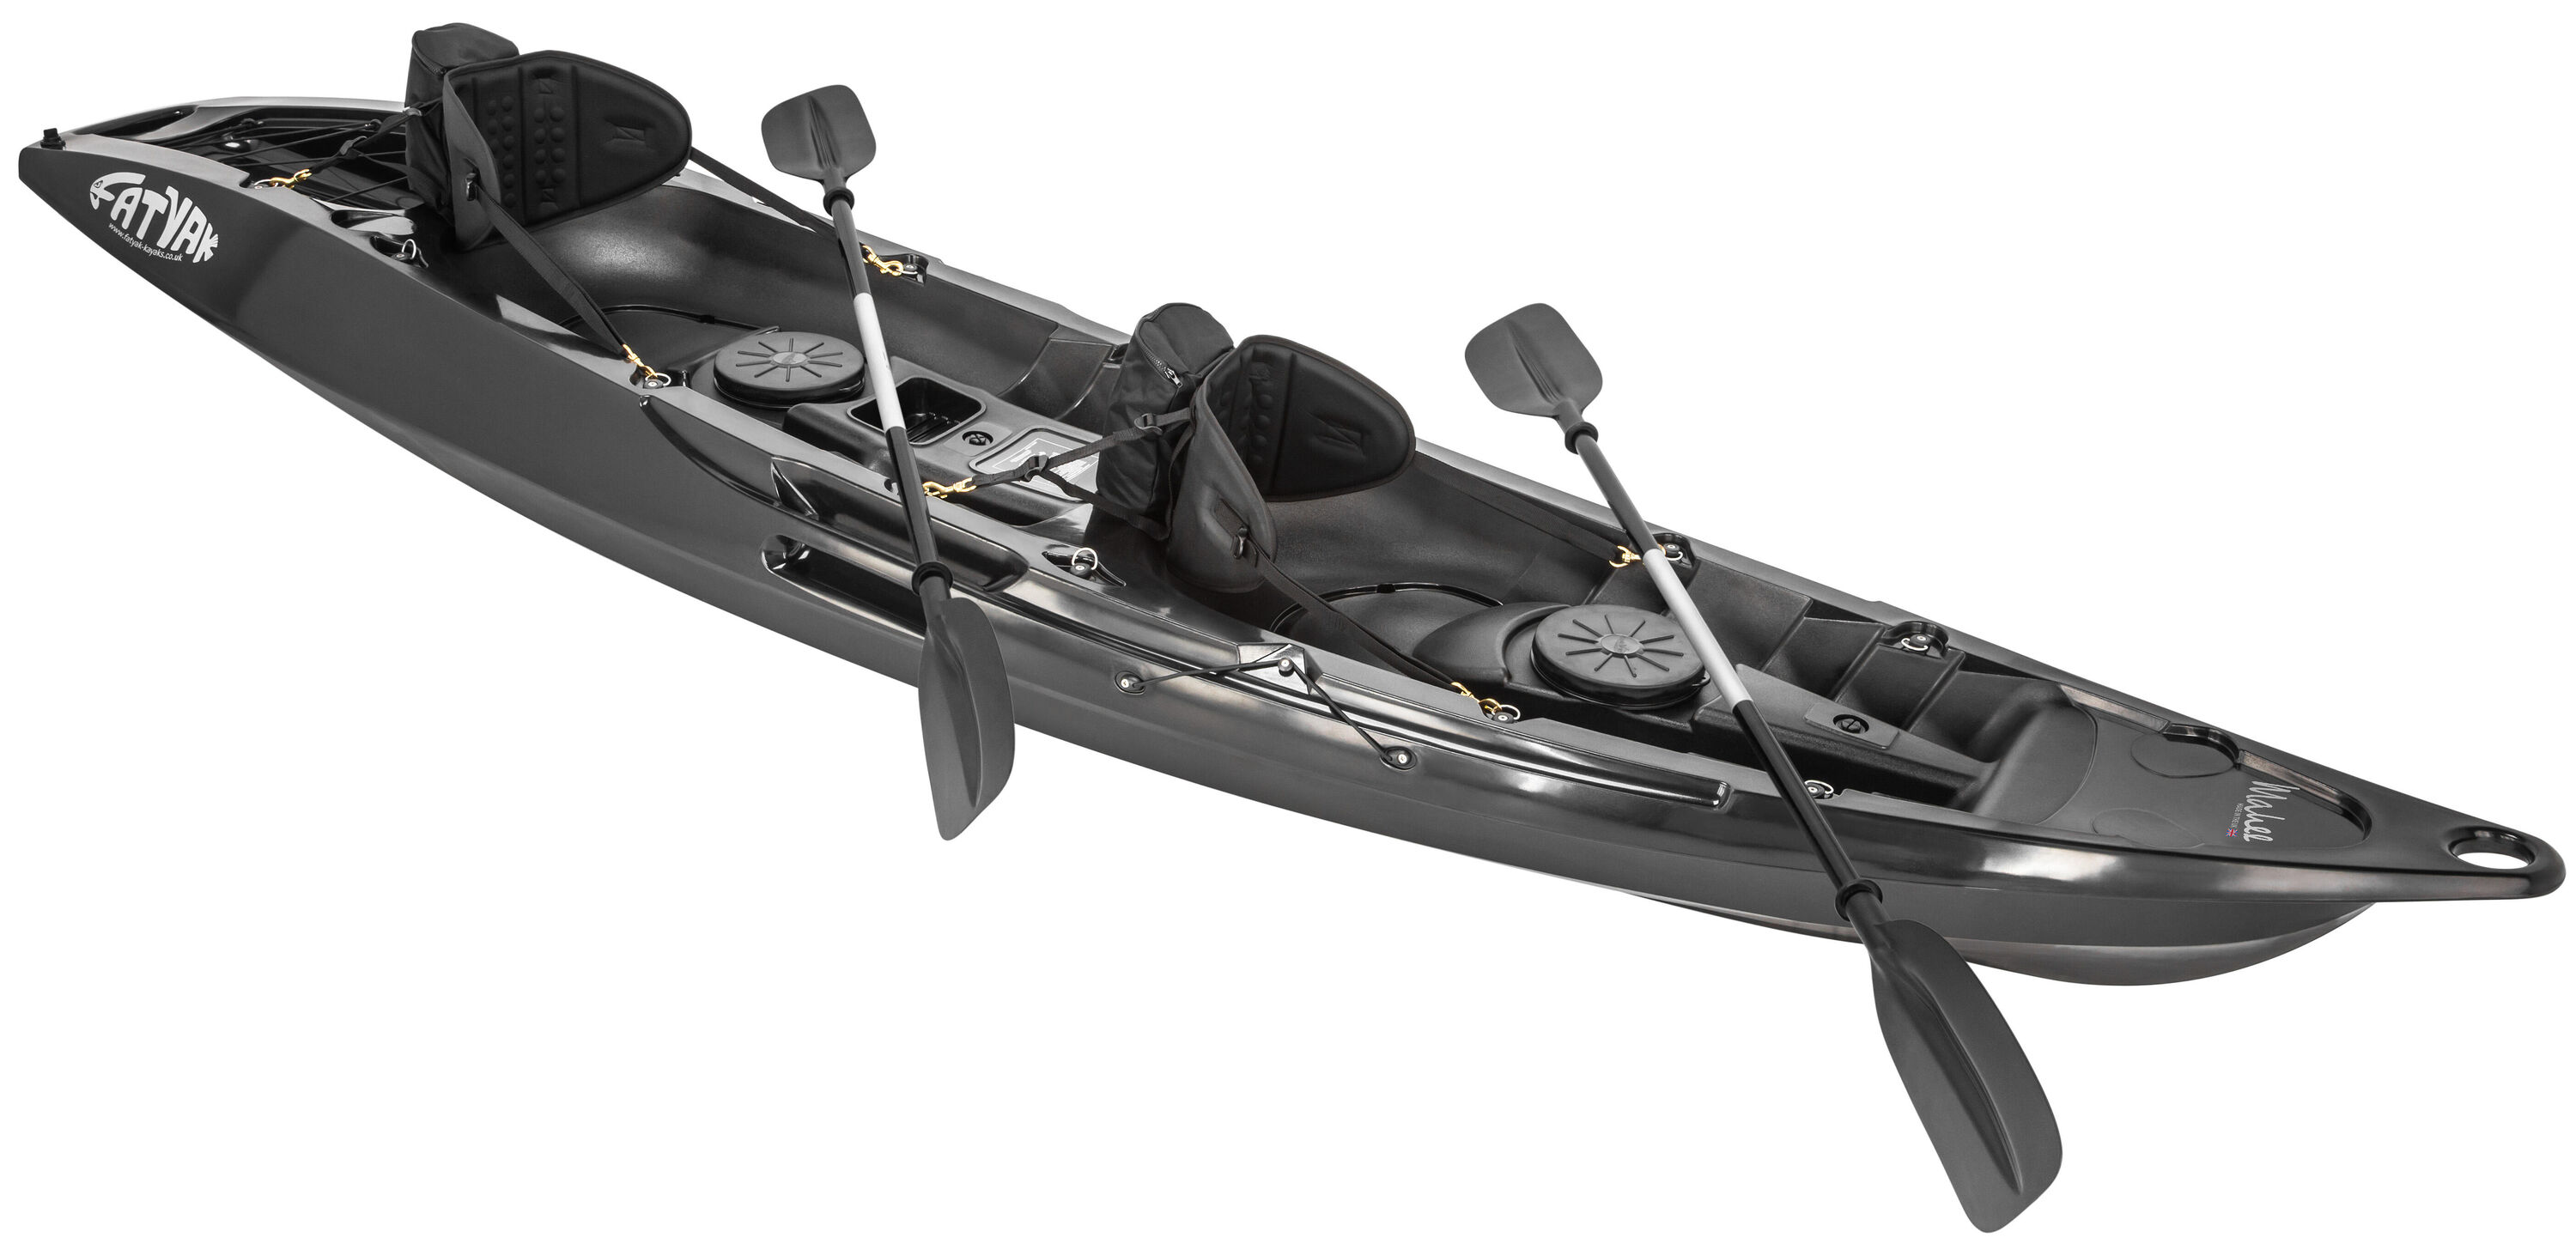 Rigid Kayaks - 1 To 4 Person Hard Kayaks